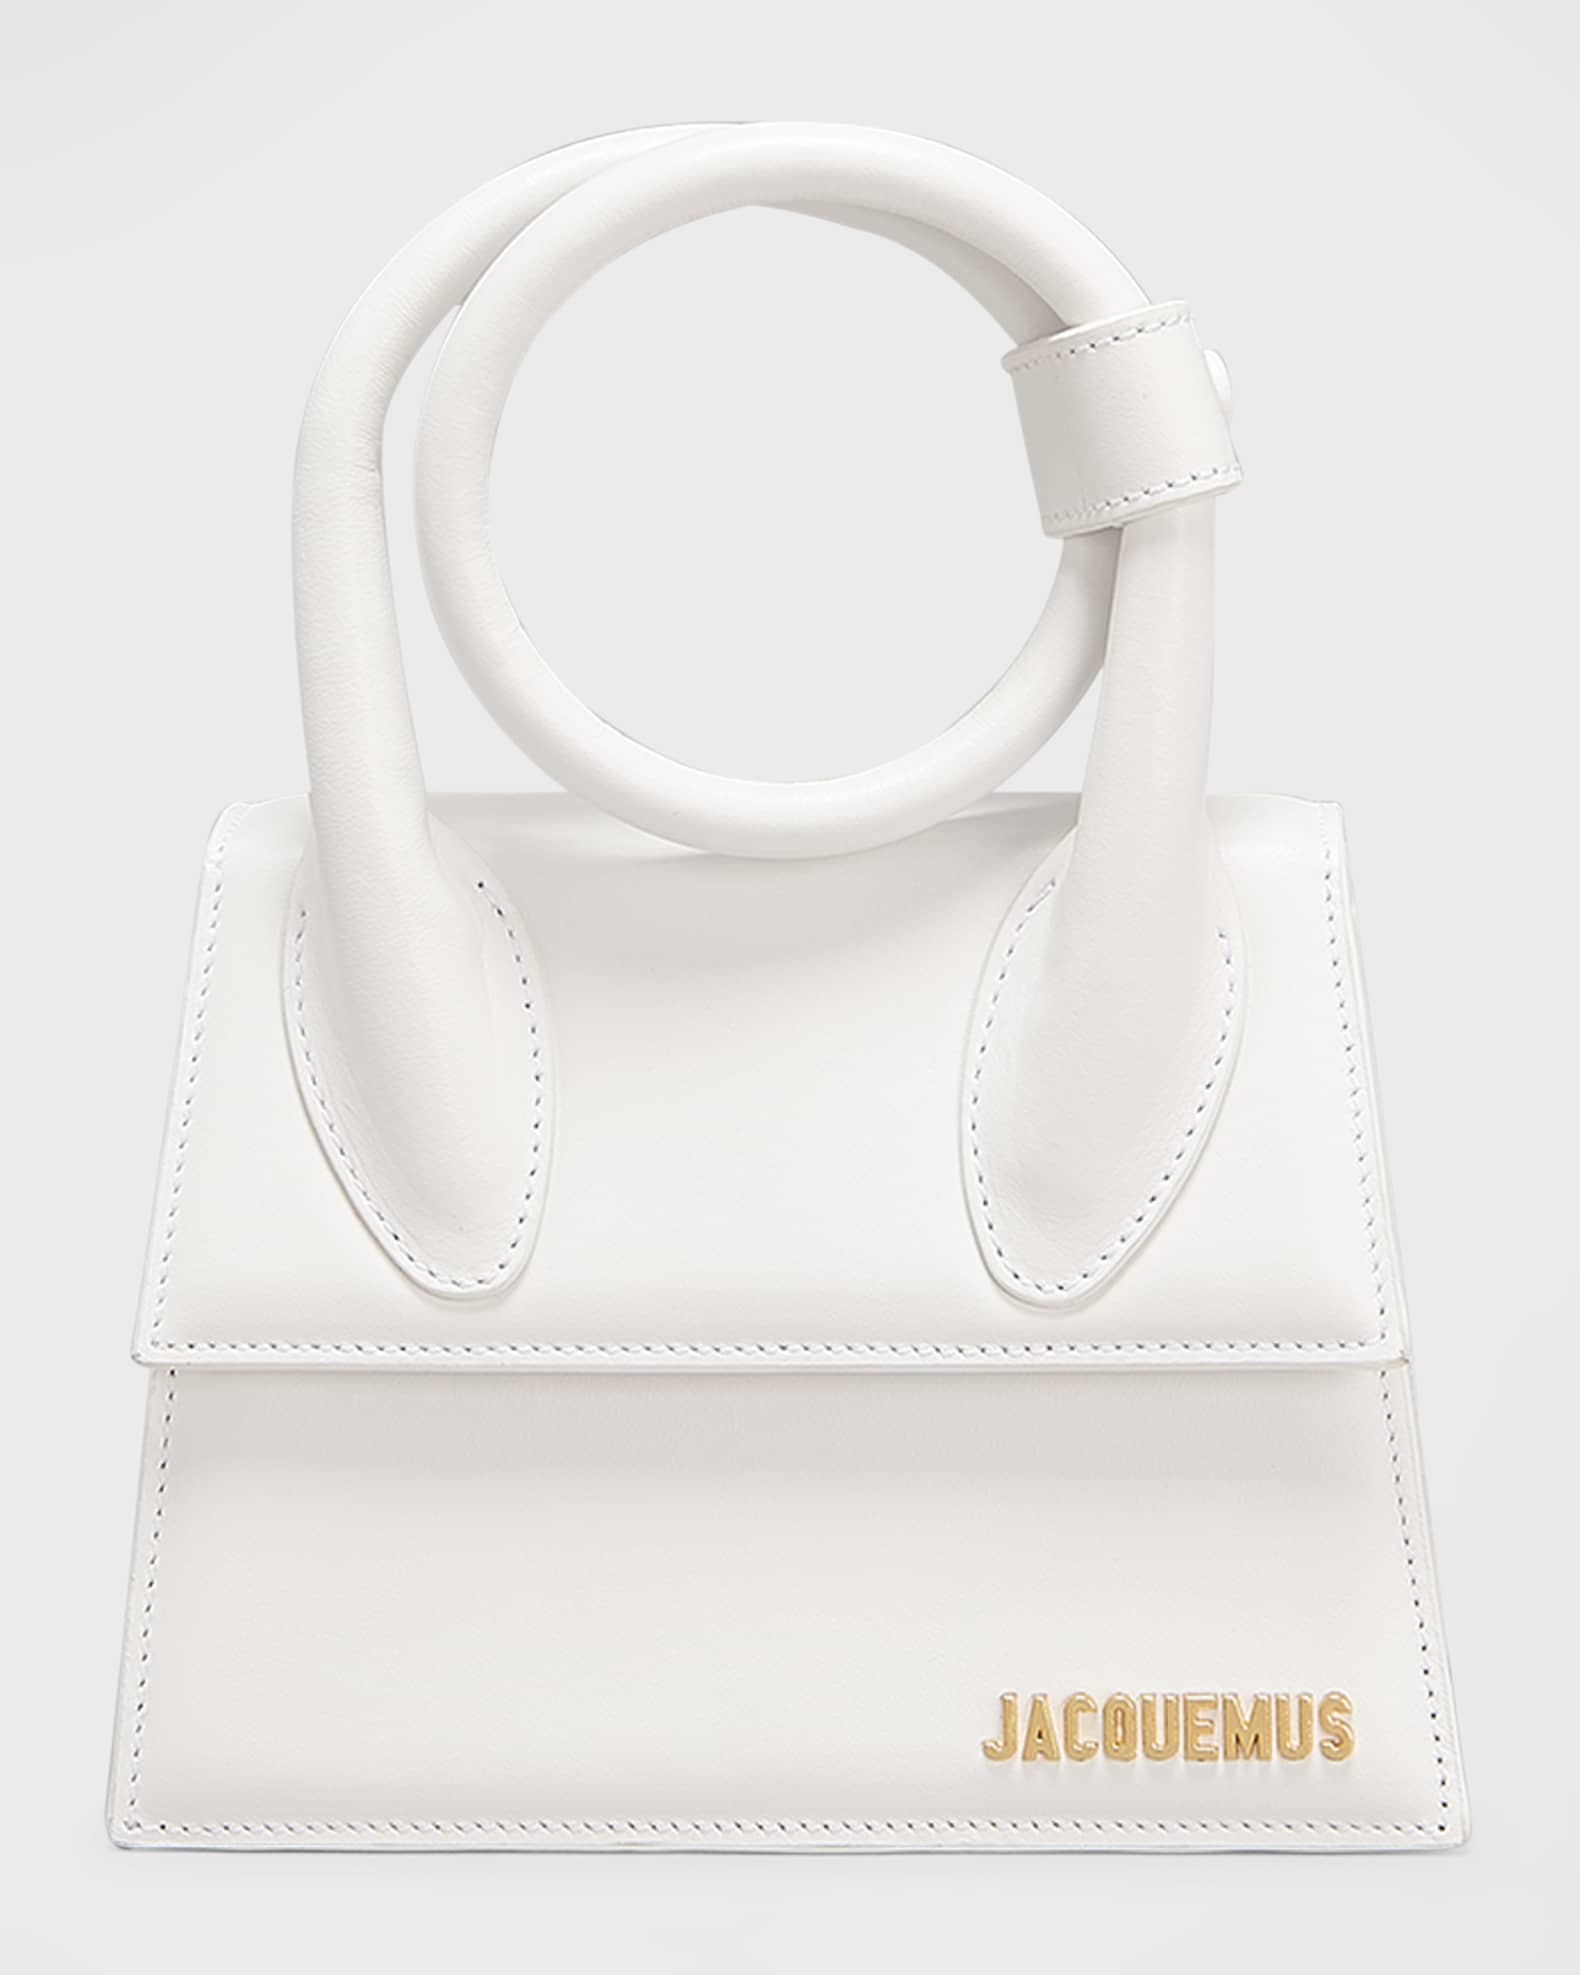 Jacquemus Le Chiquito Noeud Satchel Bag | Neiman Marcus